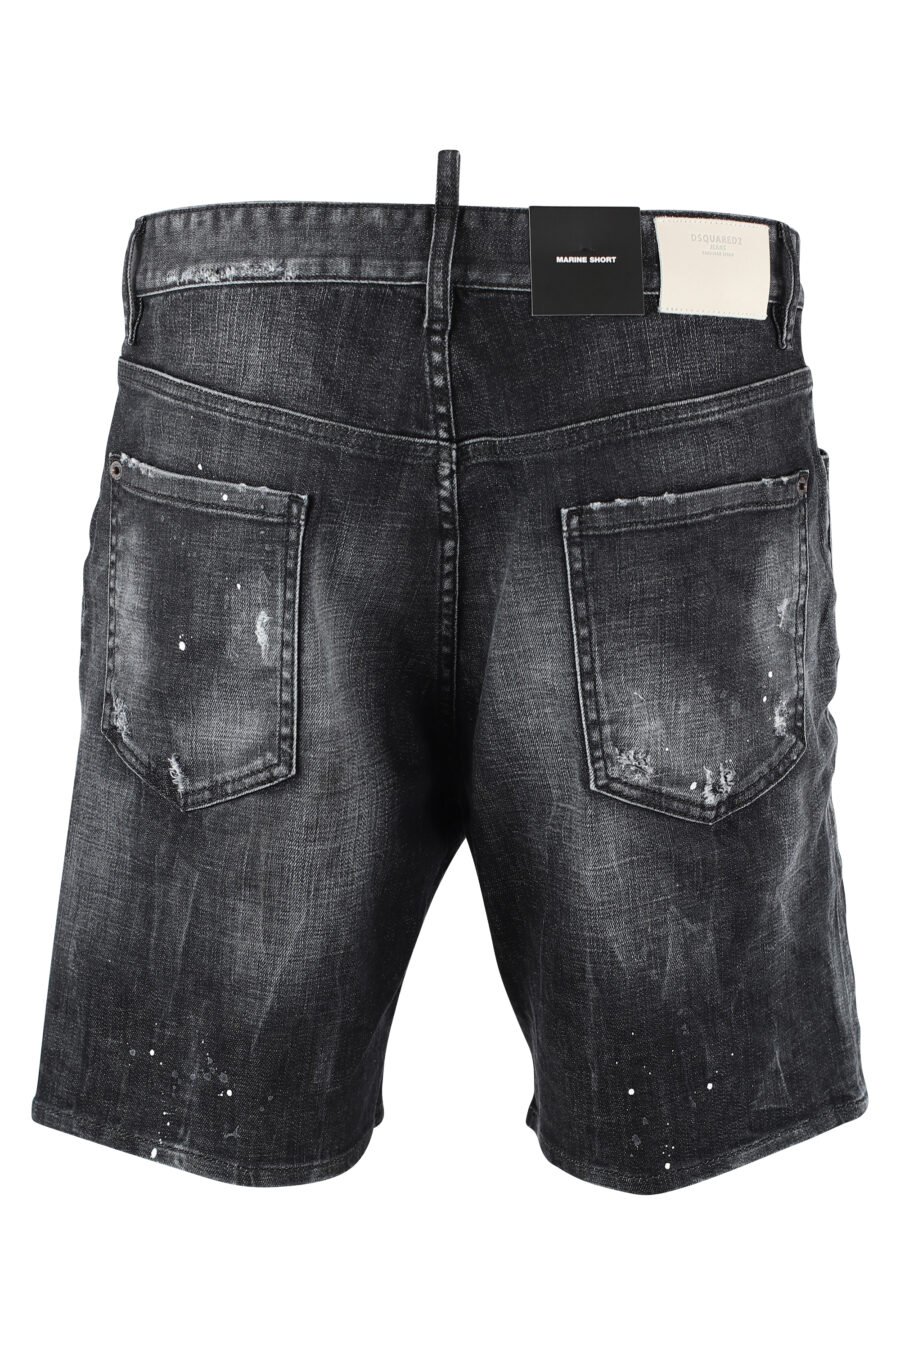 Pantalón vaquero corto "marine denim shorts" negros desgastados con rotos - IMG 9730